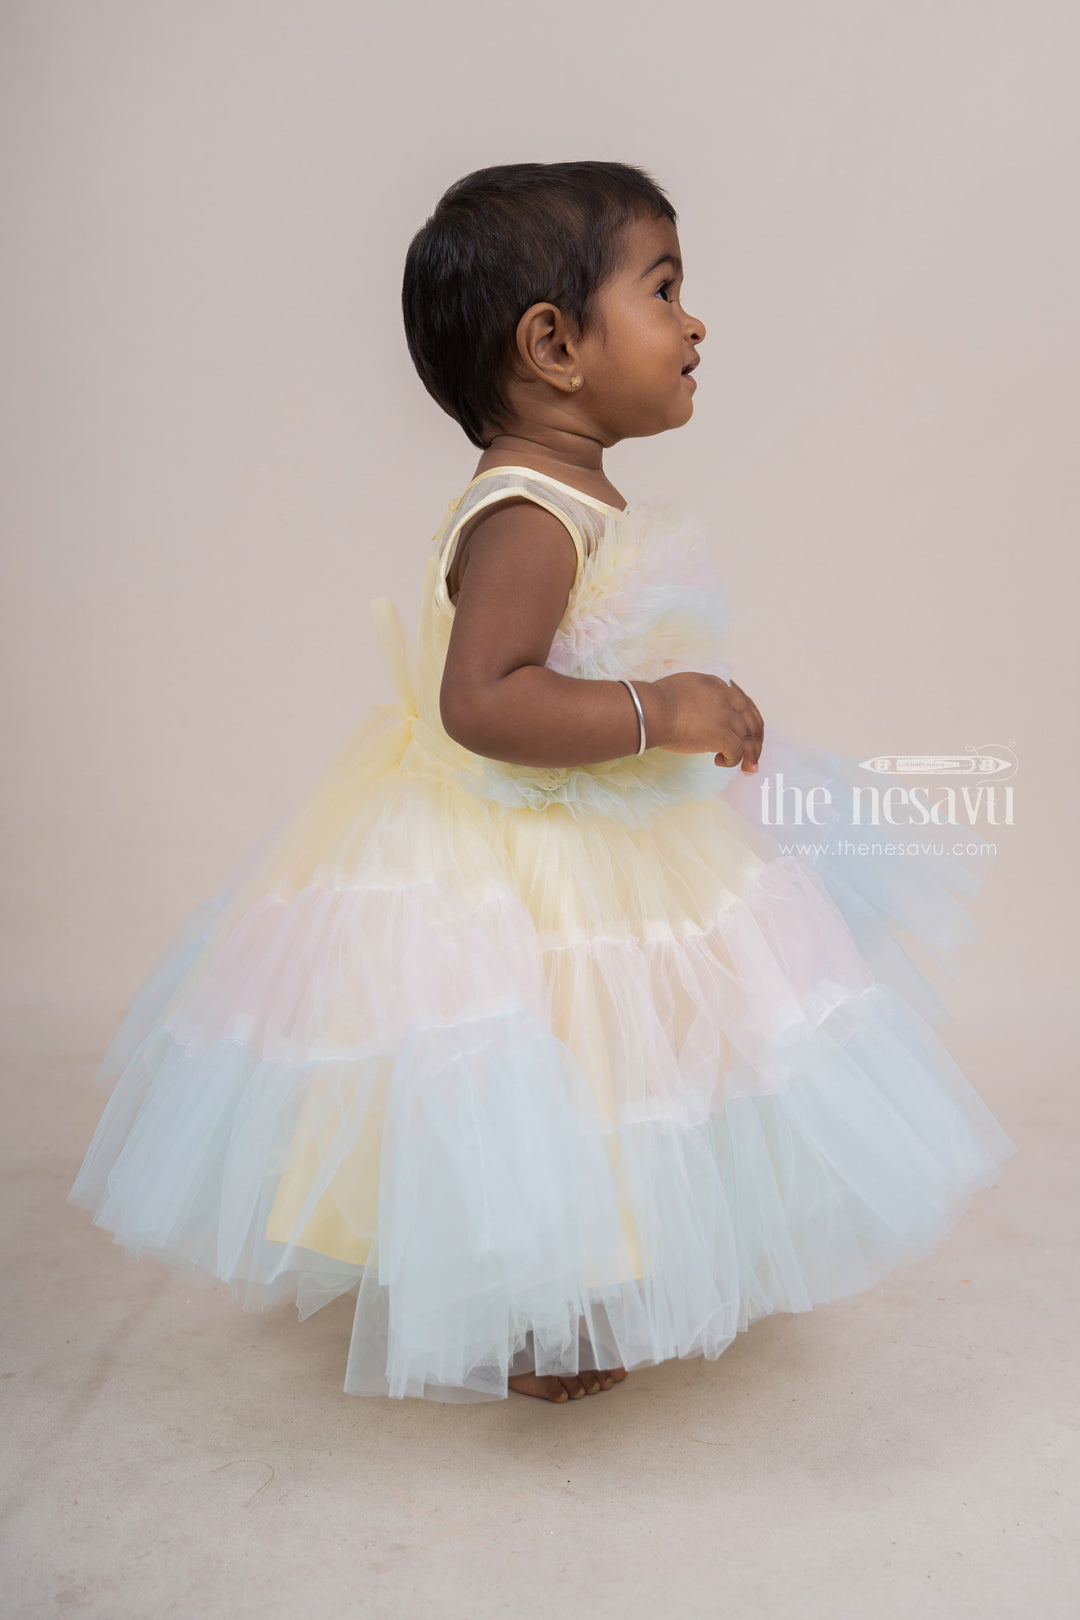 The Nesavu Party Frock Rainbow Designer Soft Net Party Wear Frock For Infant Girls psr silks Nesavu